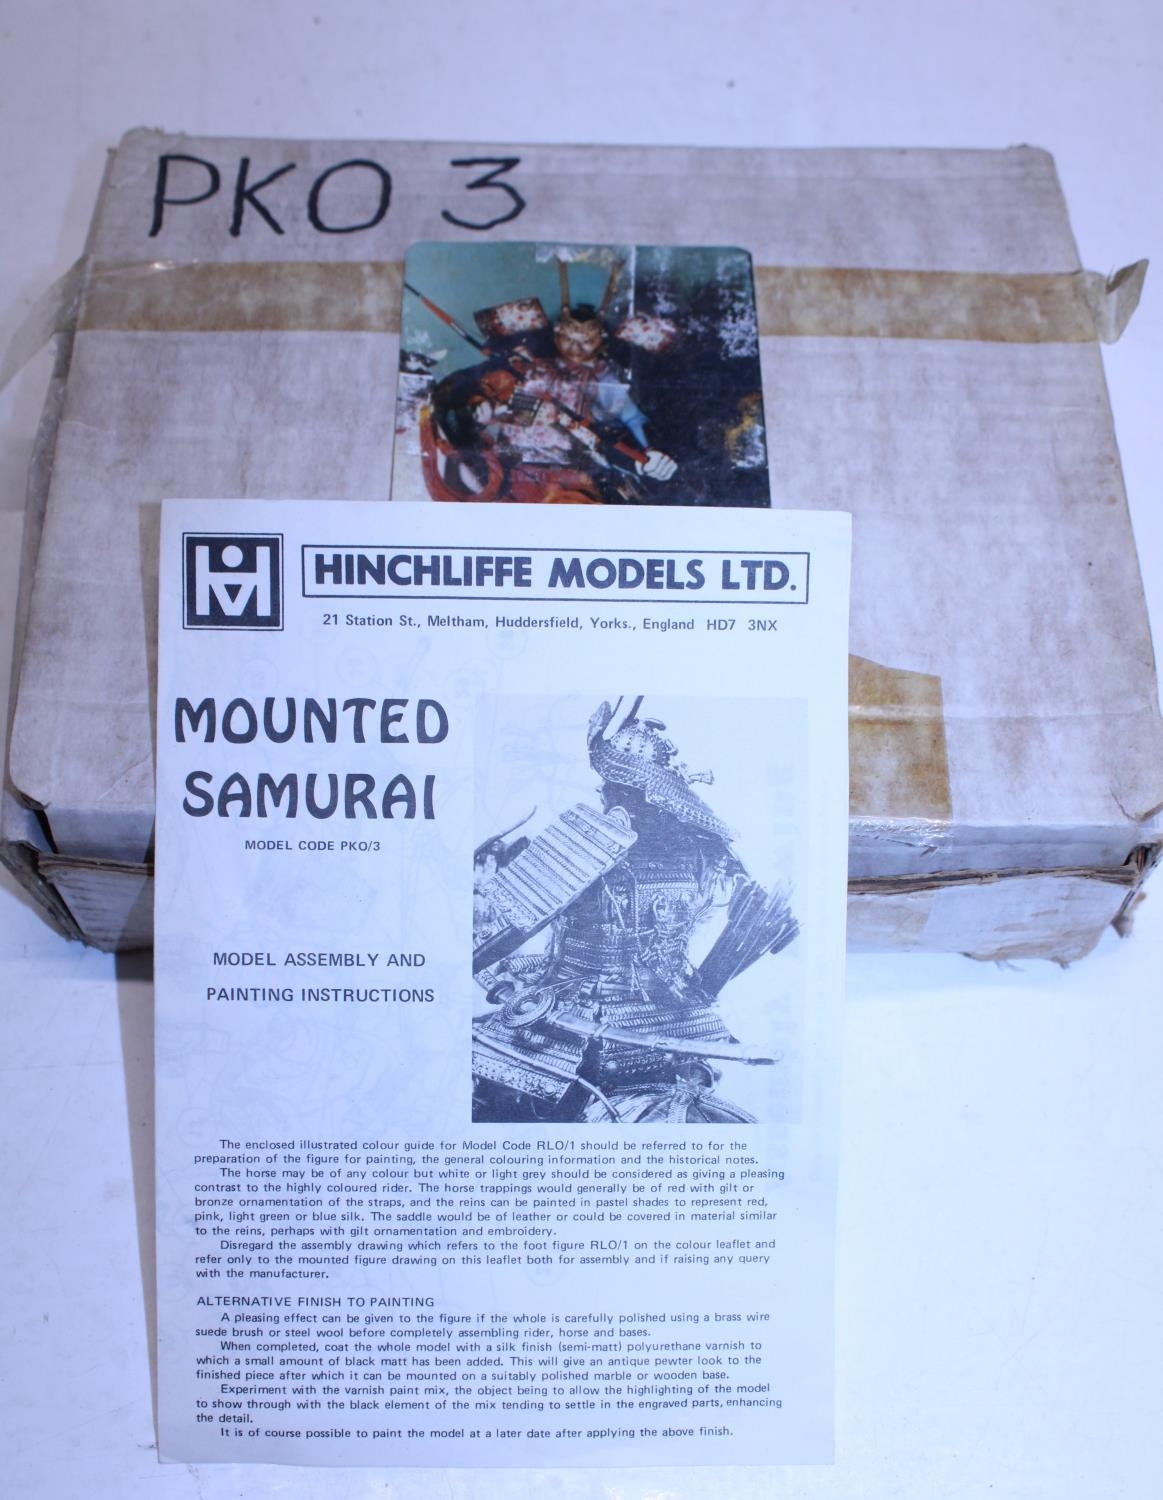 A Hinchcliffe model figure of a mounted samurai